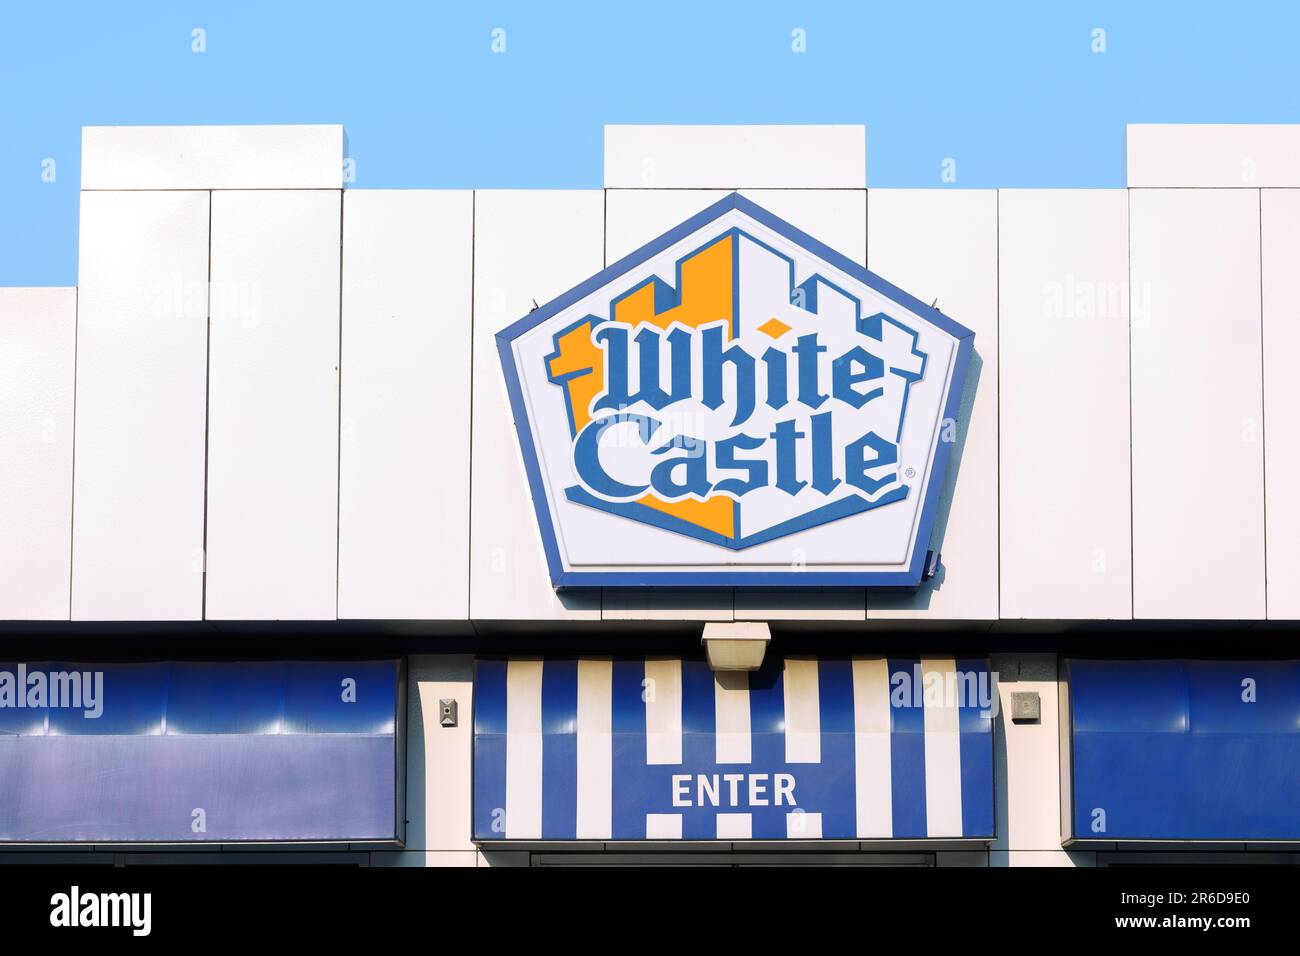 A White Castle fast food hamburger chain restaurant against a sunny blue sky. Stock Photo